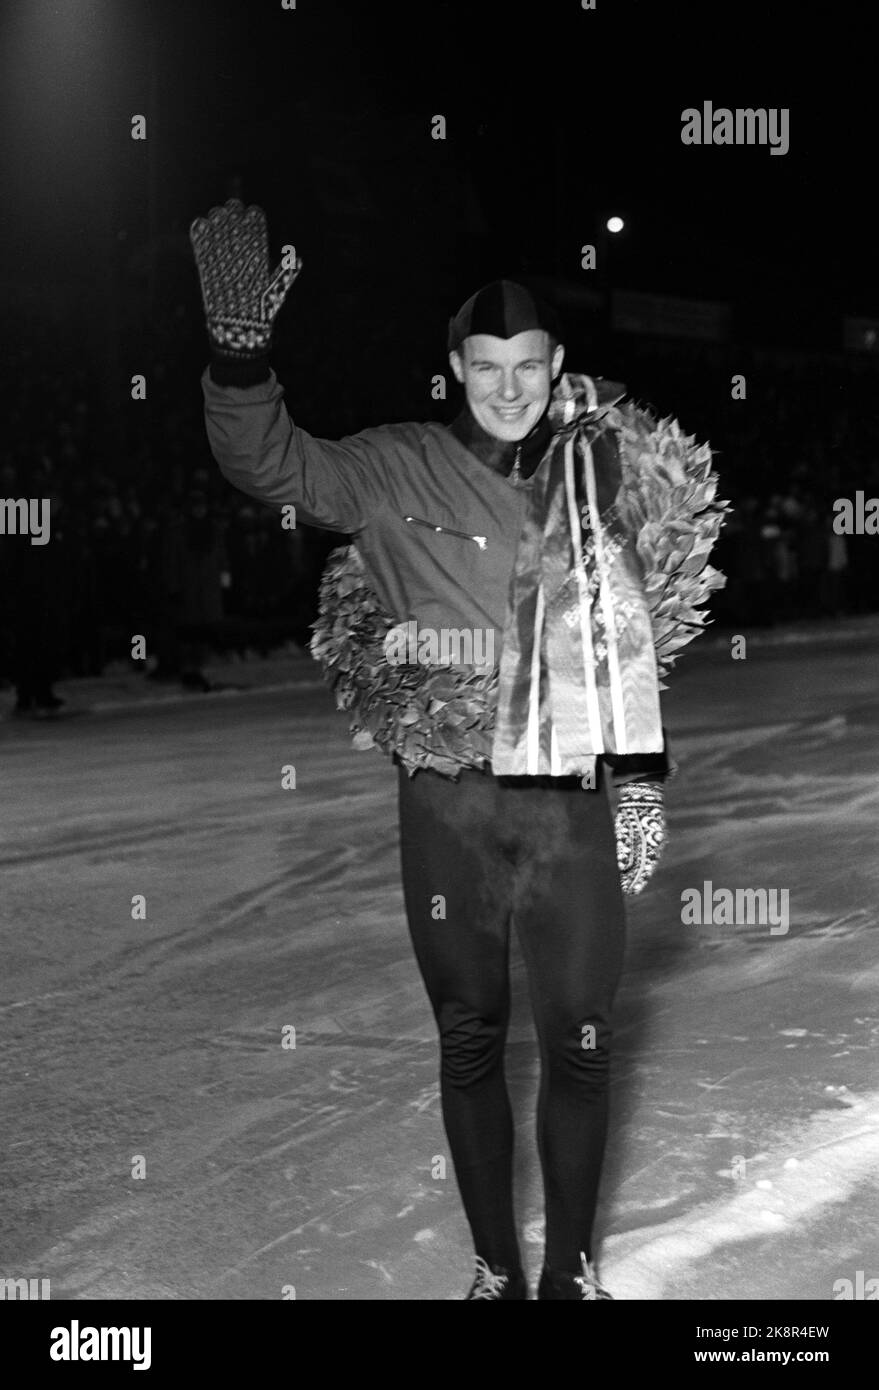 Hamar January 26, 1963. Norwegian skating championships. Here Knut Johannesen (Kuppern) who became Norwegian champion. Photo: Ivar Aaserud / Current / NTB Stock Photo